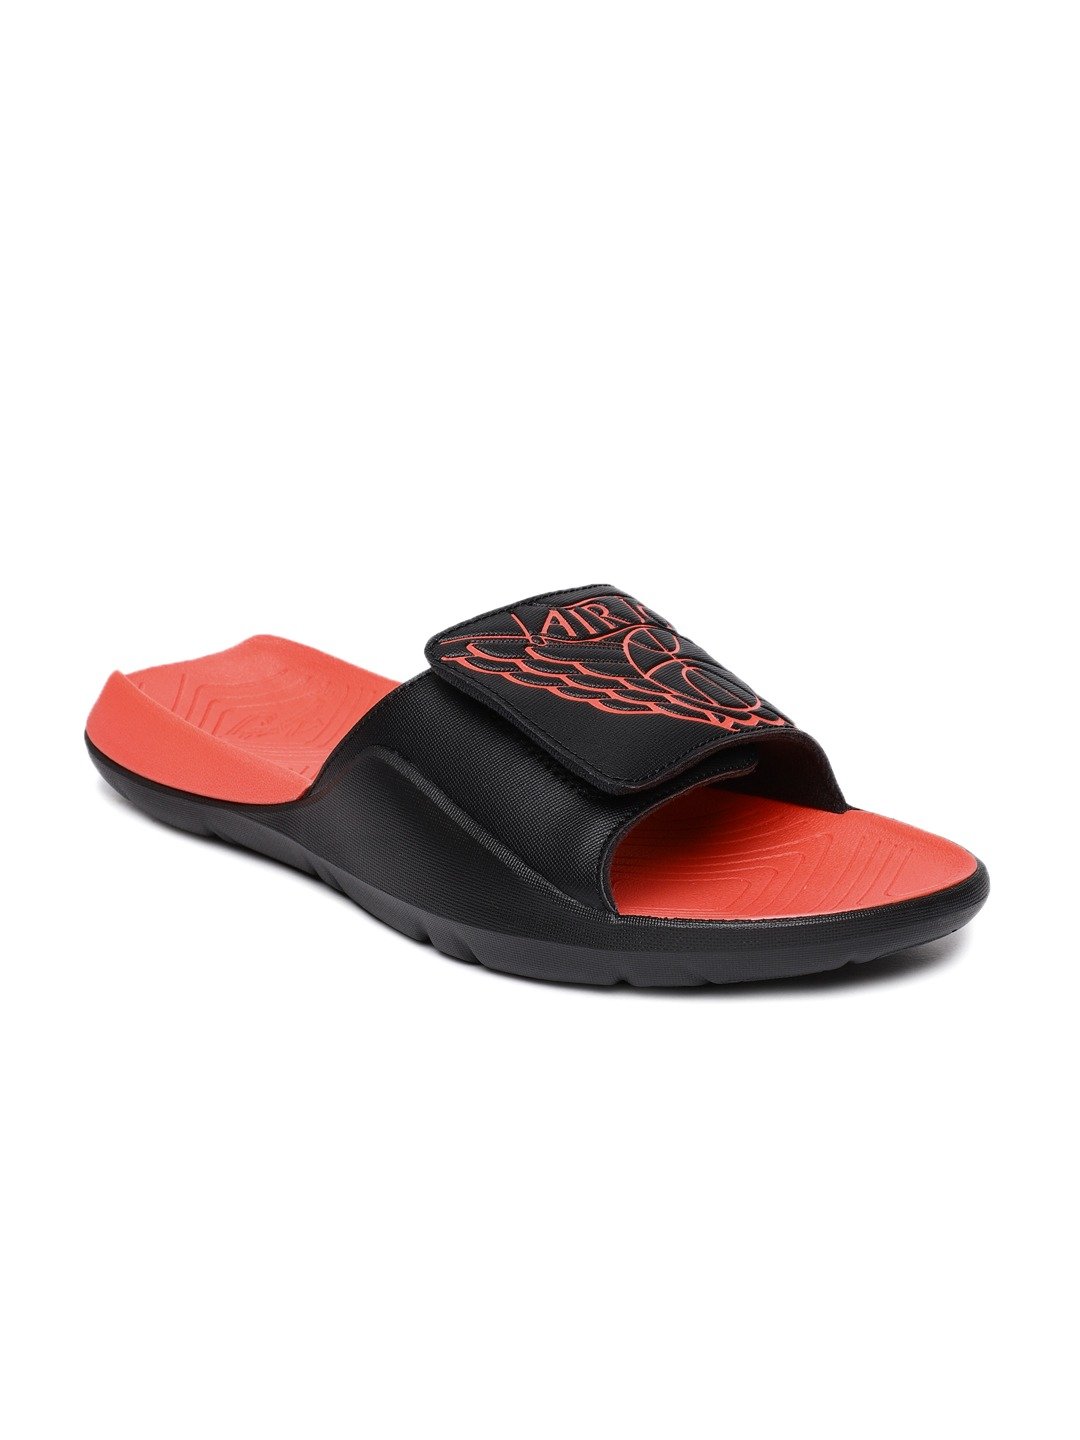 Men Black & Red Jordan Hydro 7 Printed Sliders - Discount Store